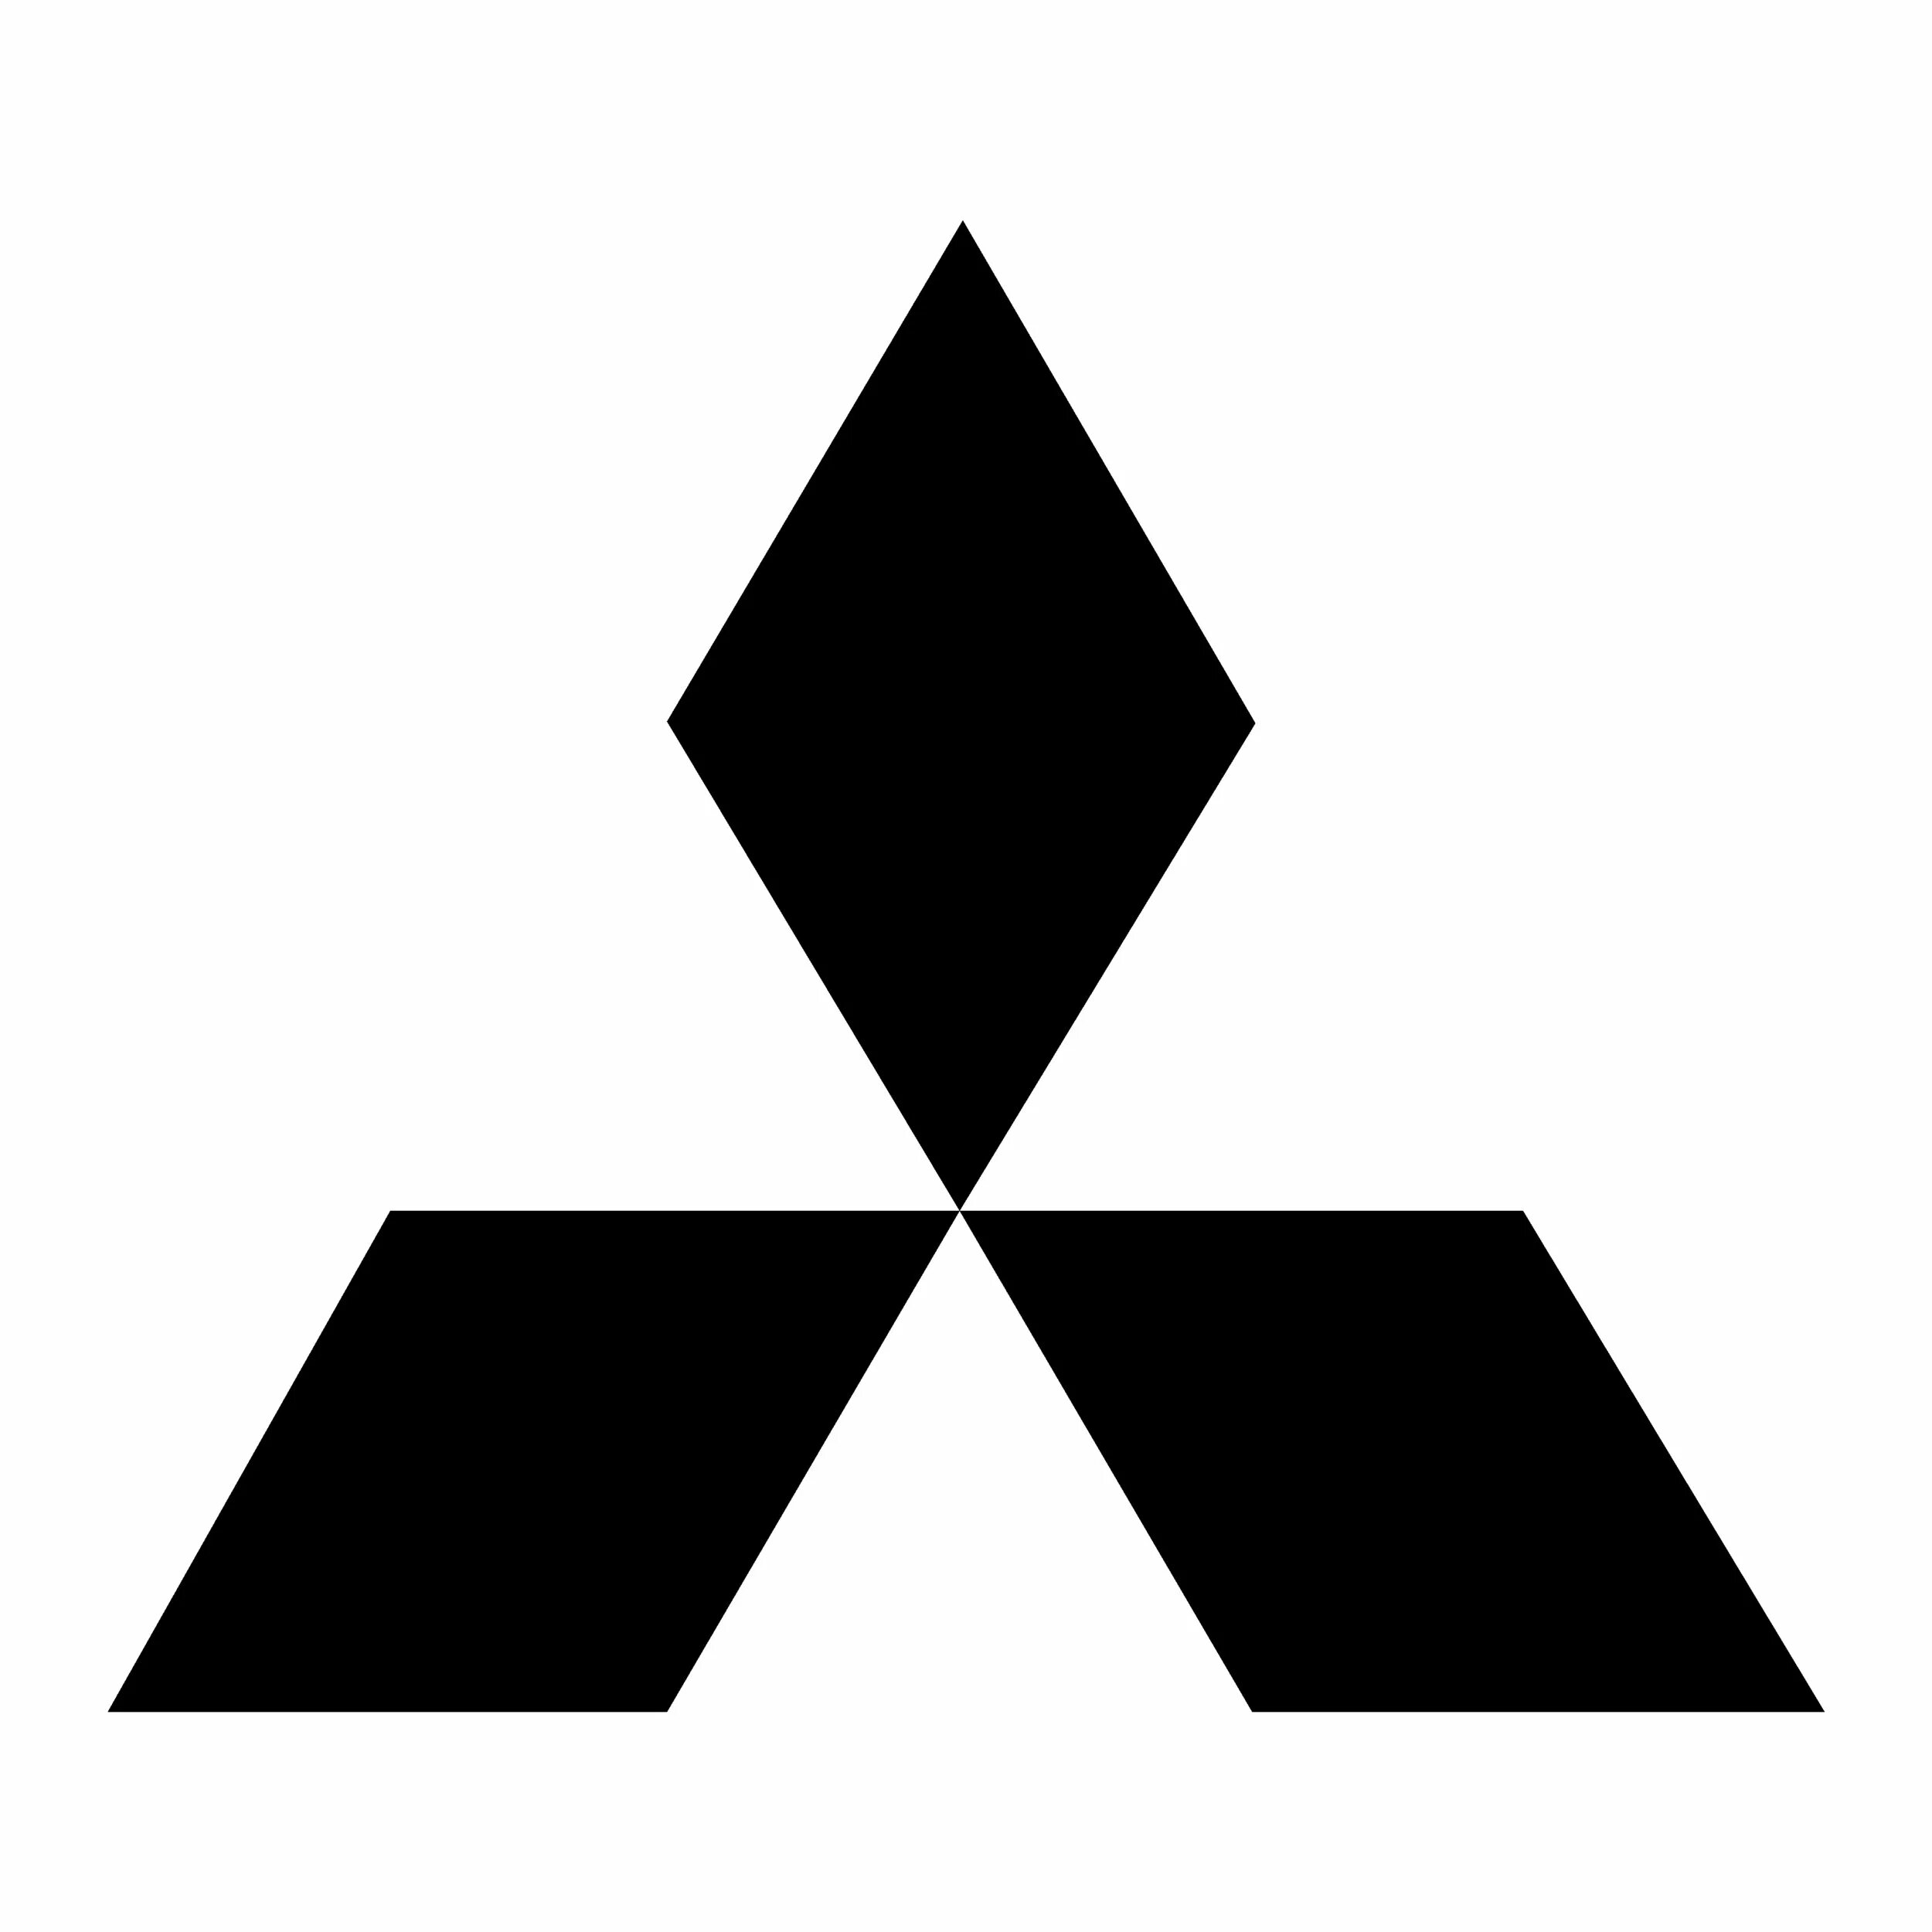 Логотип mitsubishi. Мицубиси лого. Митсубиши значок. Mitsubishi Motors эмблема. Мицубиси символ.